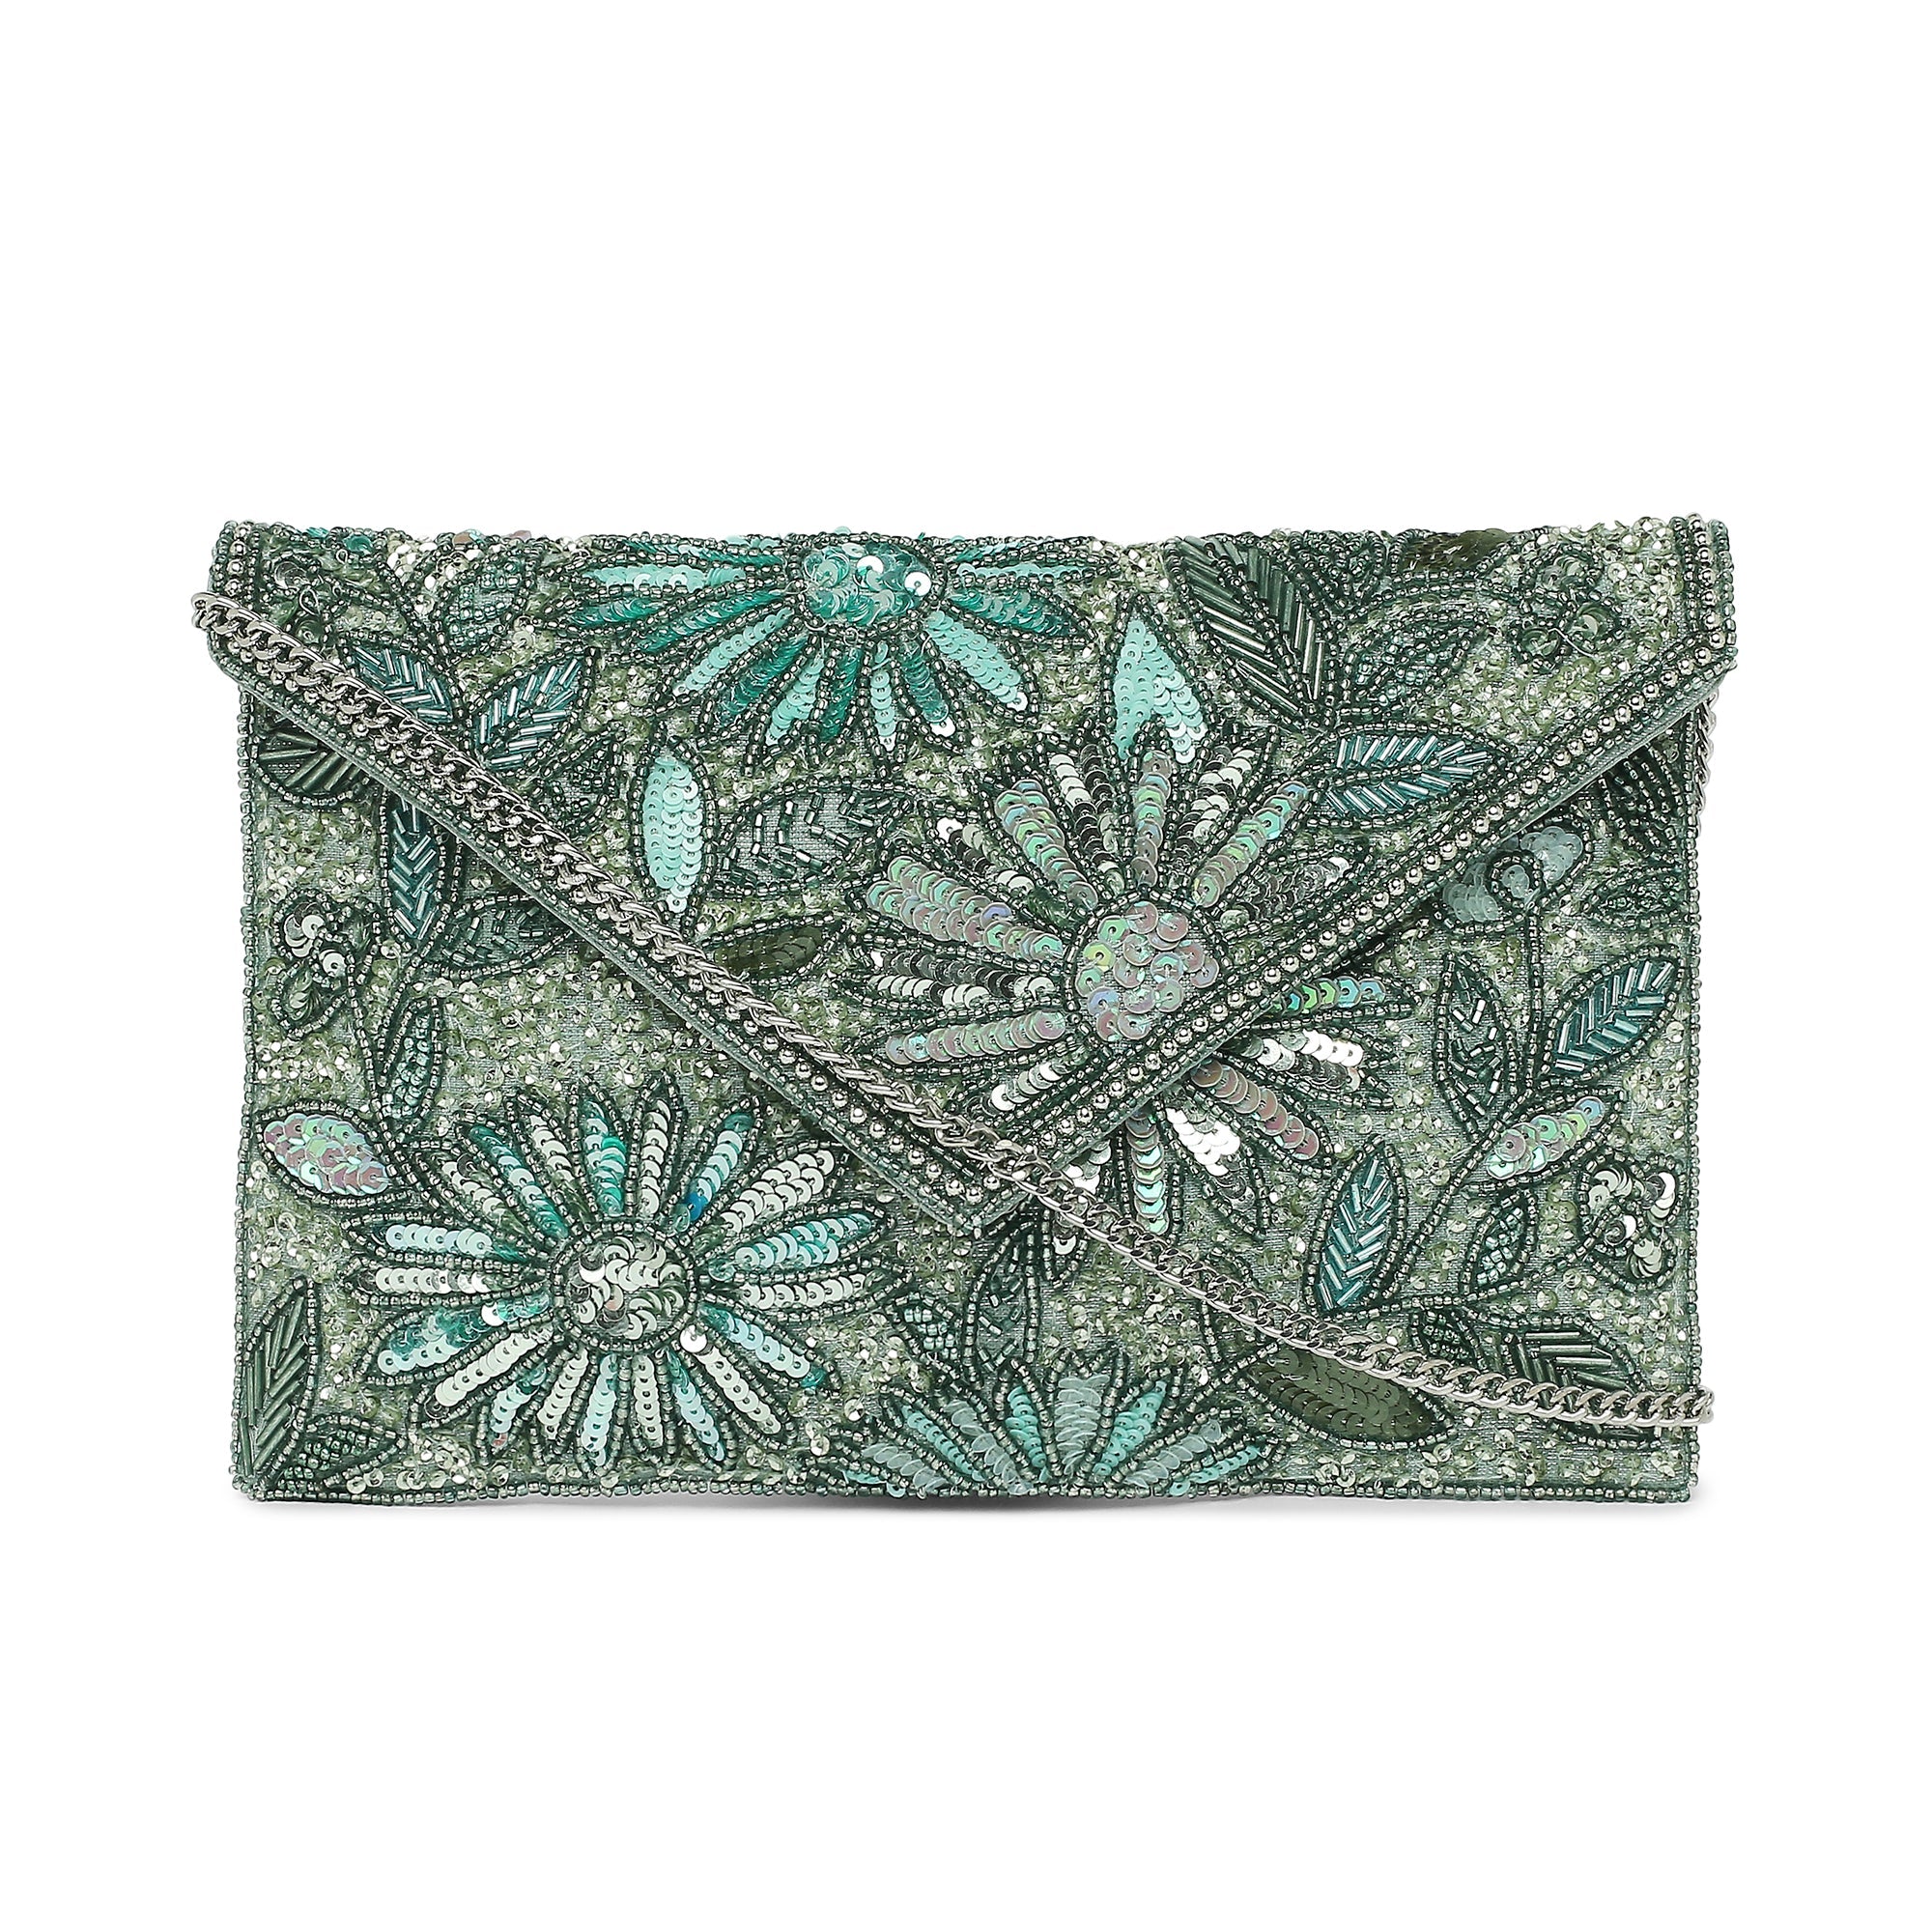 Buy Clutch and Potli Bags Online: Elegance in Every Carry | Shop Now -  Kuberan Silks